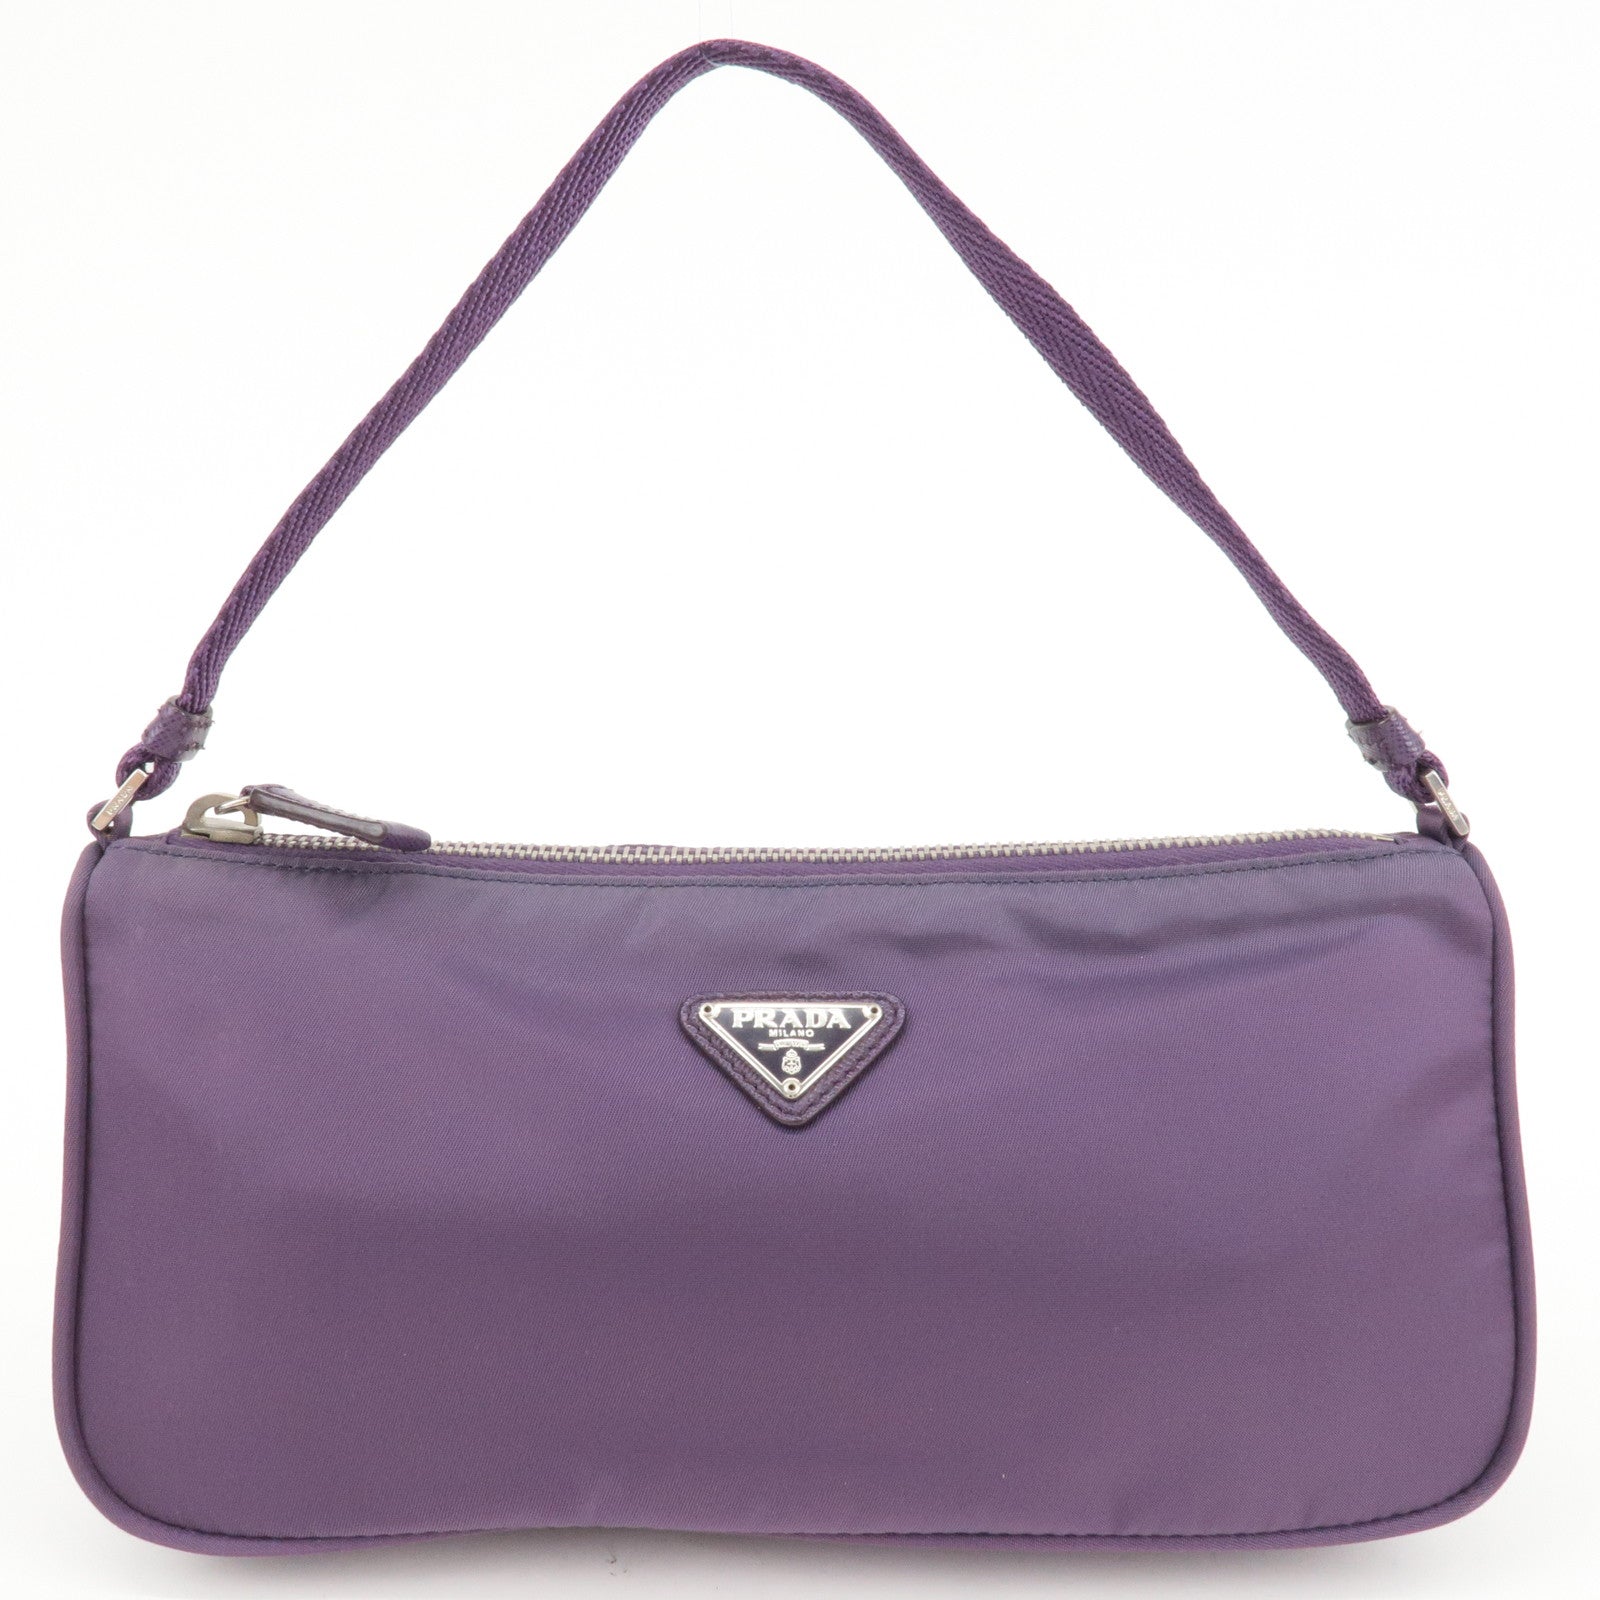 MV633 – Prada bow detail slim buckle belt - Hand - Cosmetic - Purse -  Черевики дутікі зима чорні прада prada - Pouch - Nylon - Logo - Bag - Purple  - PRADA